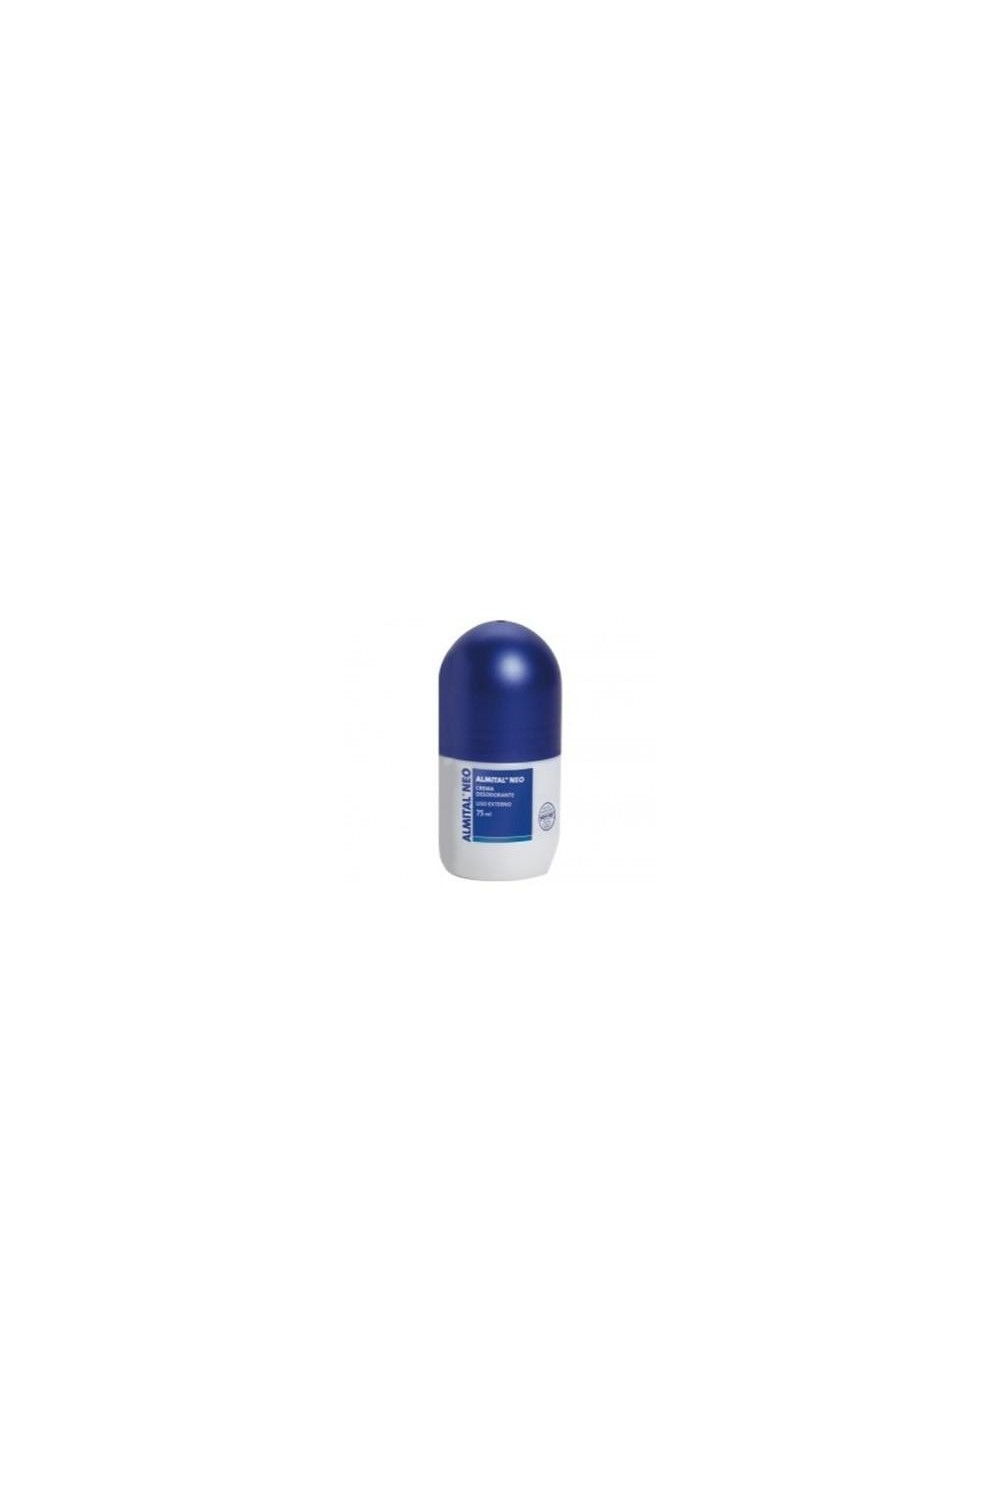 Unipharma Deodorant Almital Neo Cream Roll On 75ml